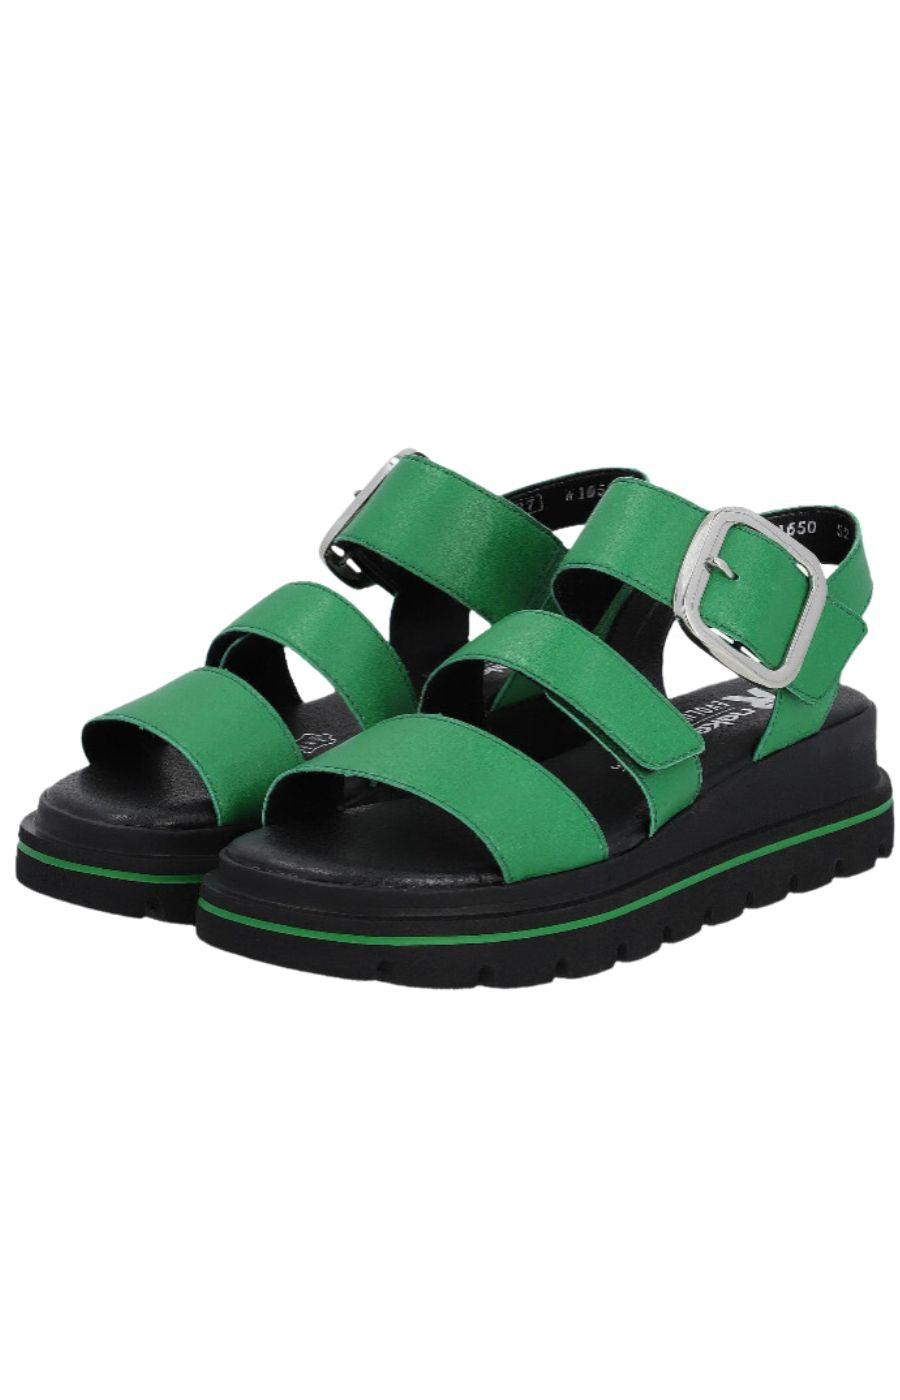 Rieker Green Strapped Sandal